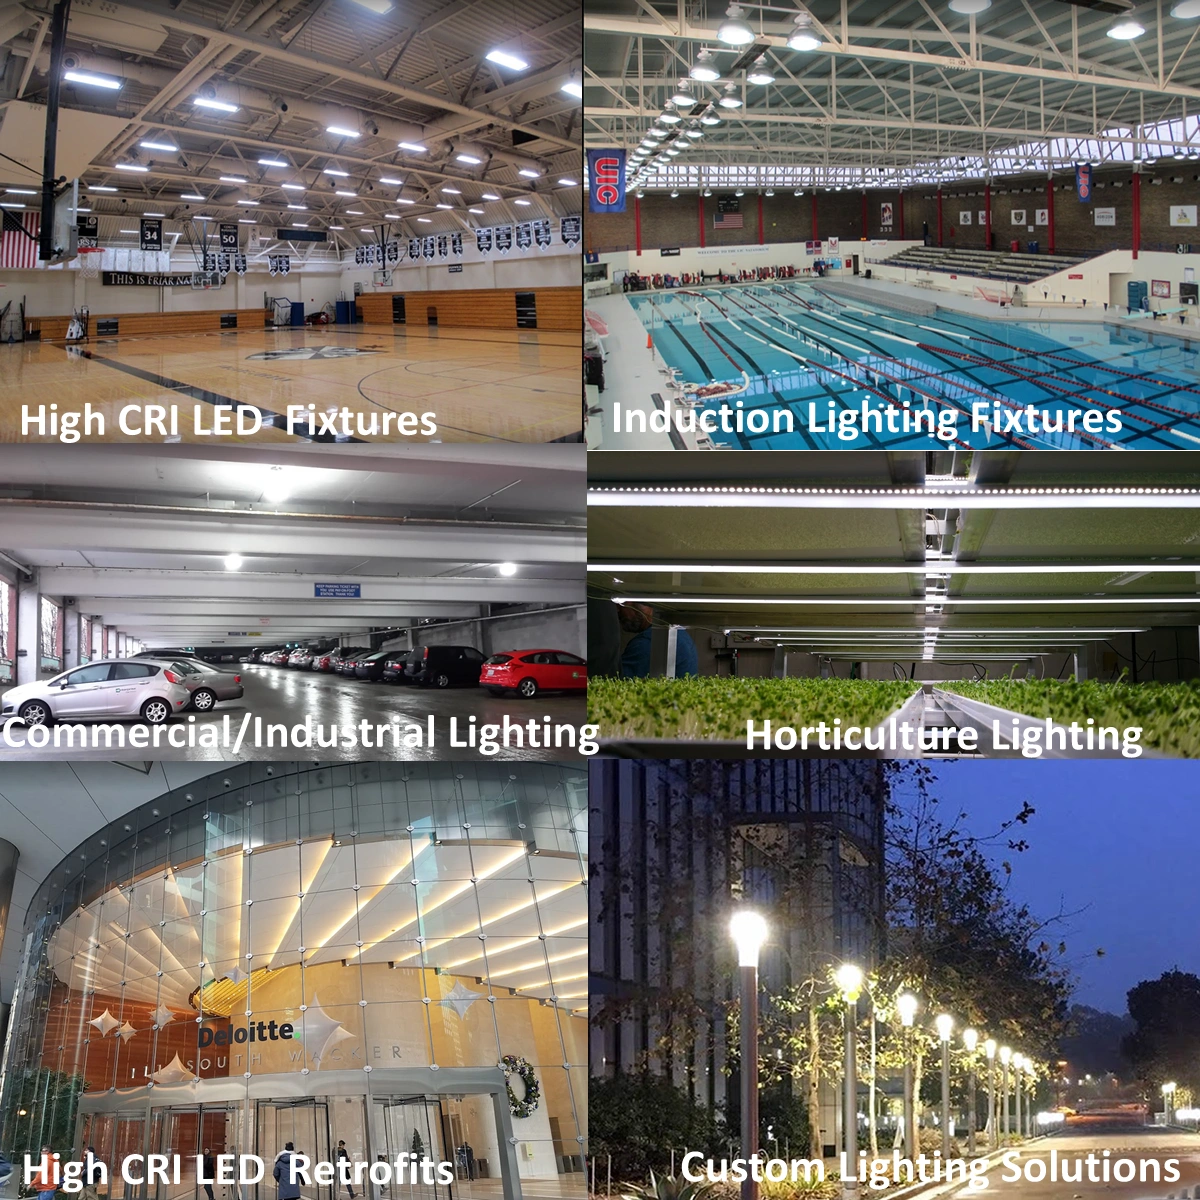 American Green Lights provides high quality LED & Induction Lighting for energy savings & long life.